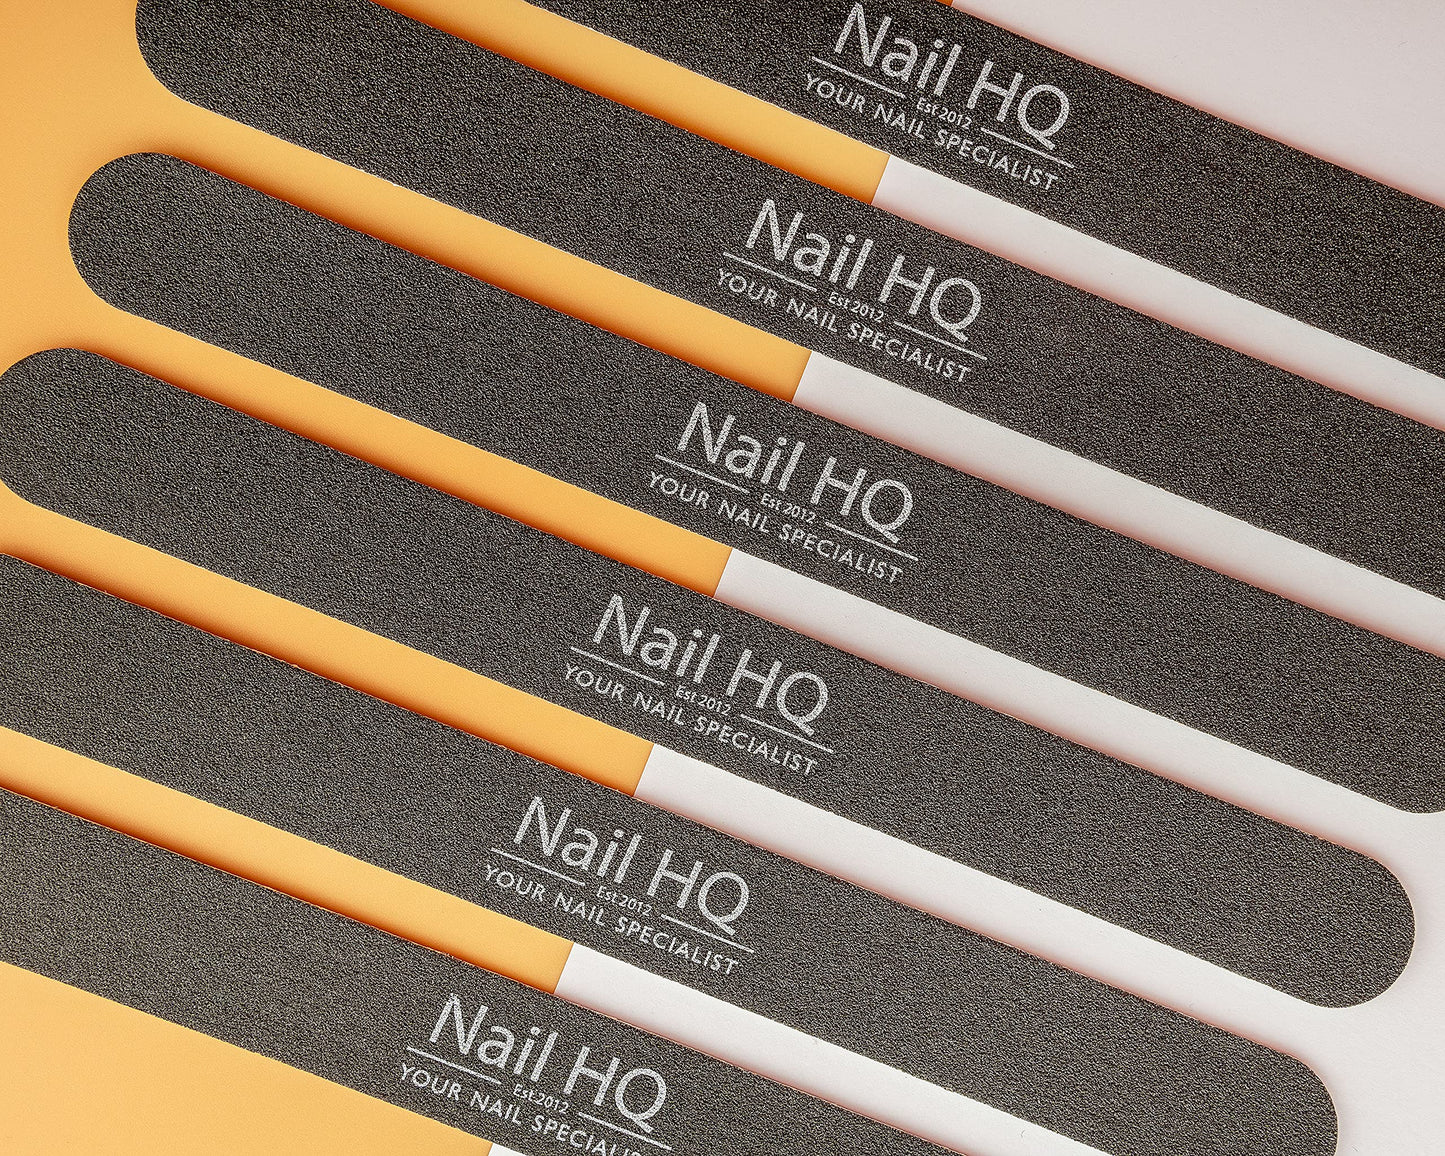 NAIL HQ Professional Nail Files x 6,Black